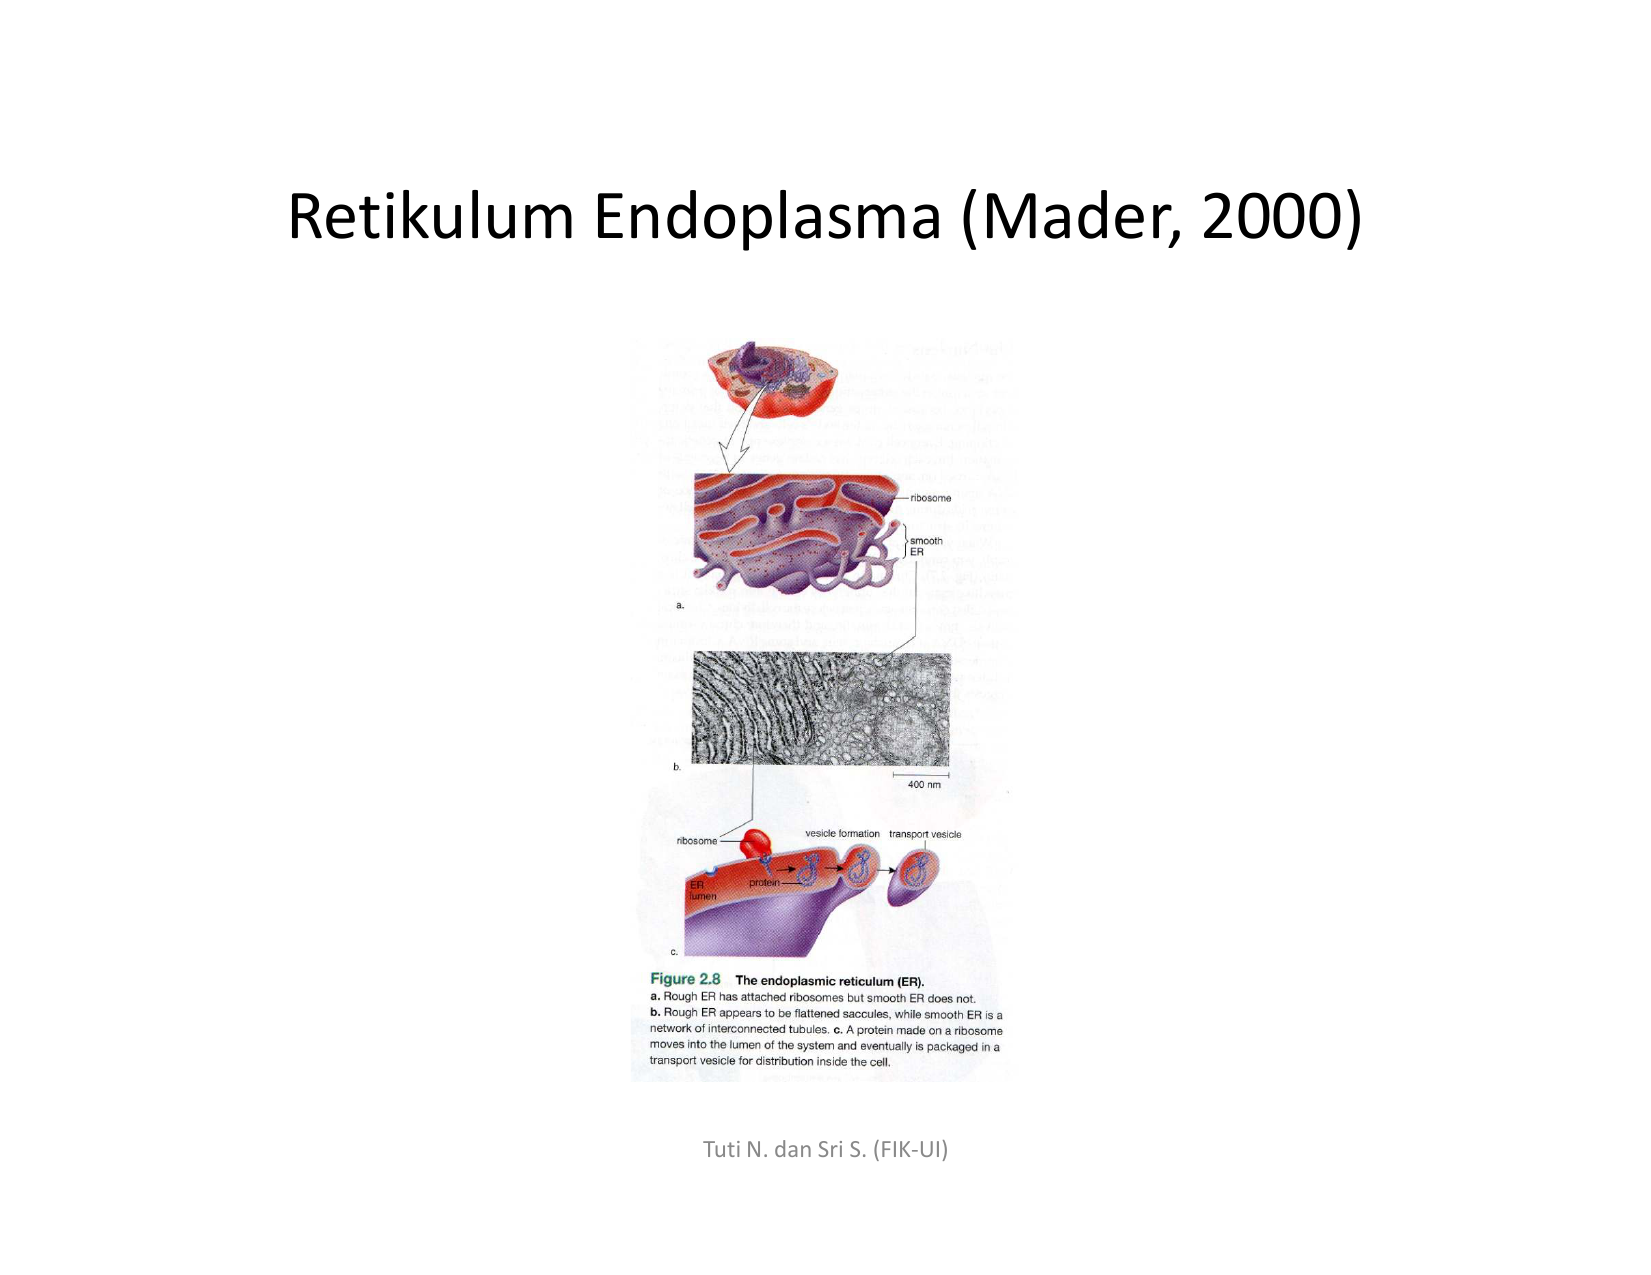 Retikulum Endoplasma. 